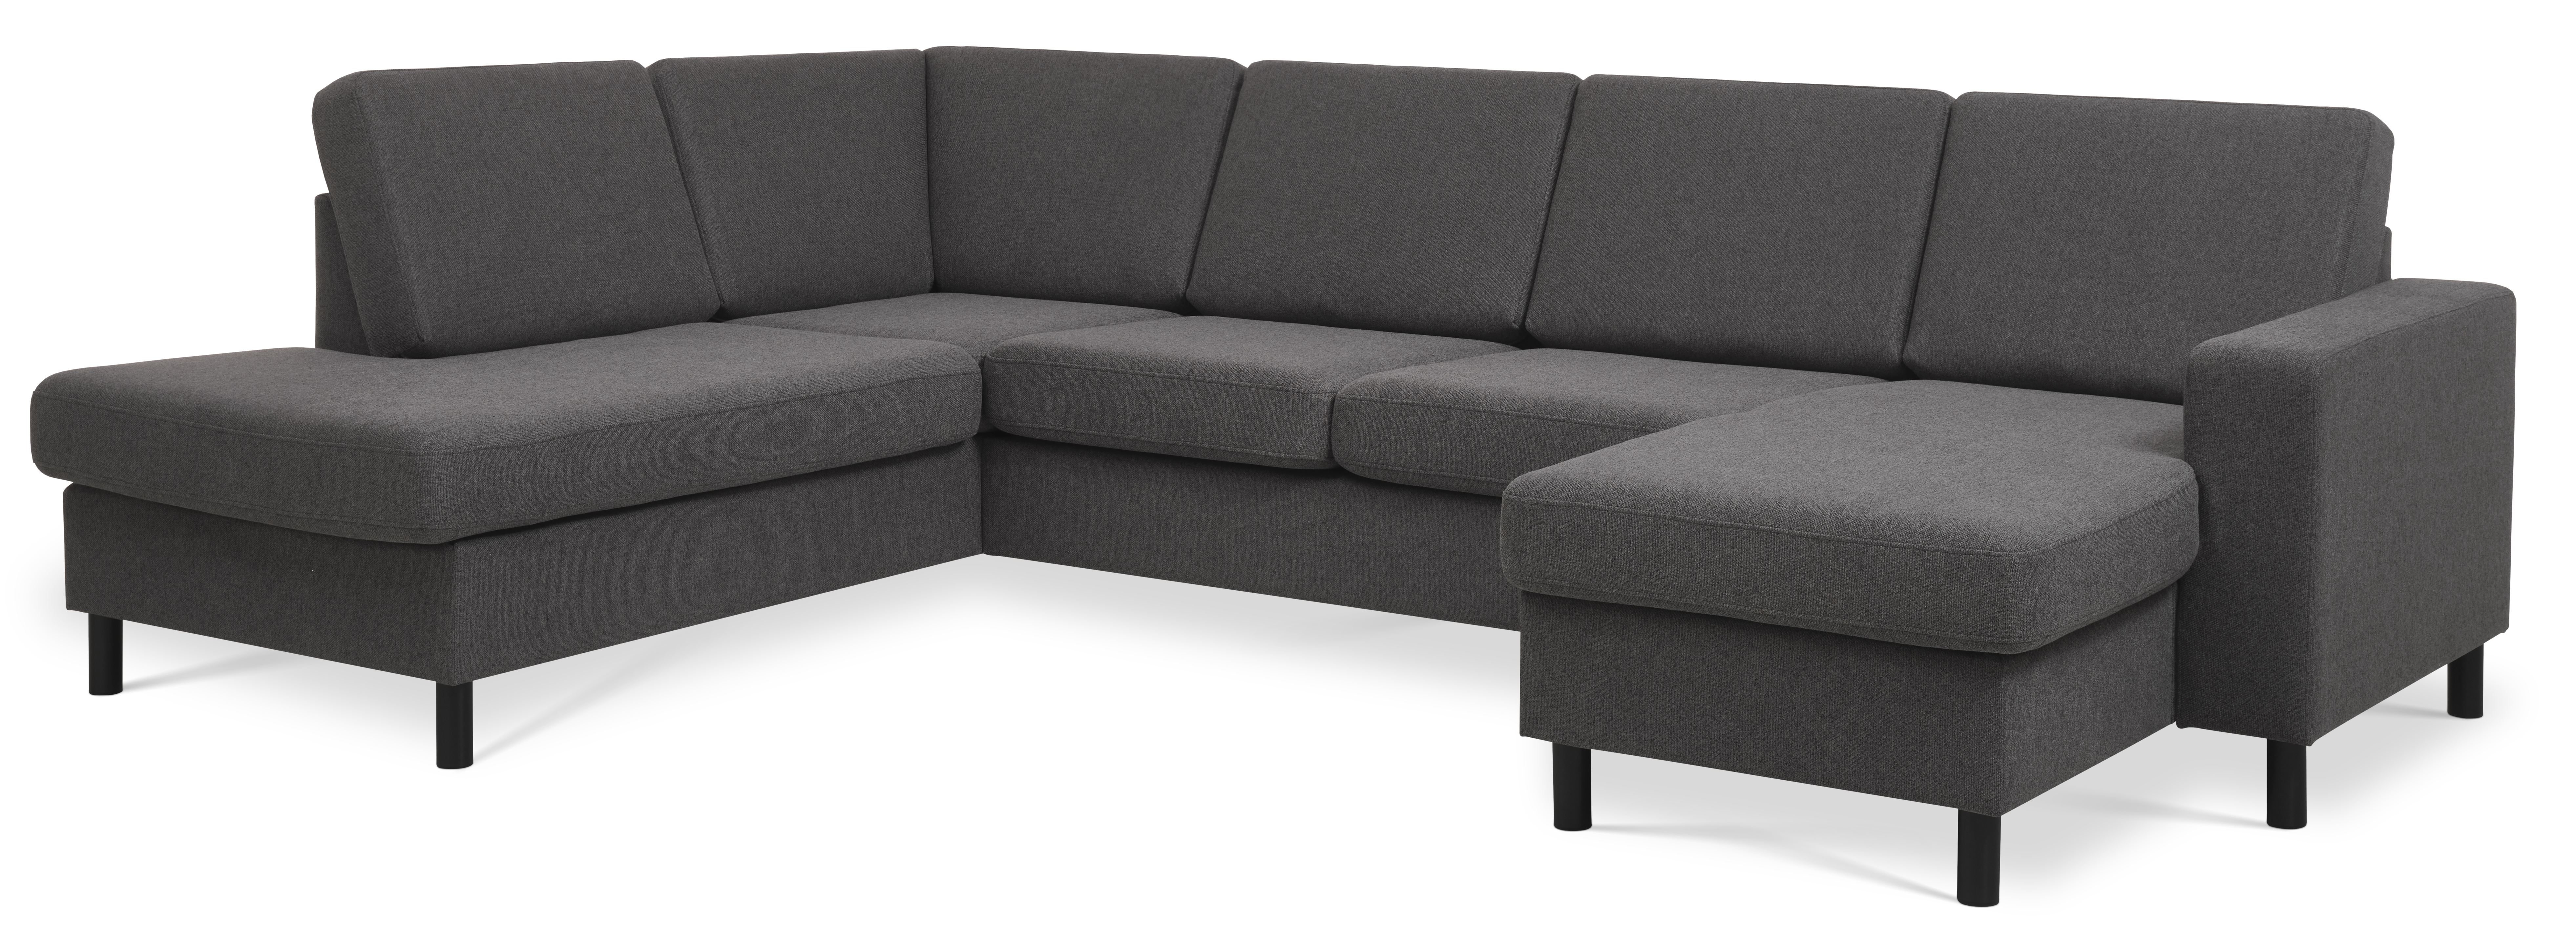 Pan set 4 U OE left sofa med chaiselong - antracitgrå polyester stof og sort træ